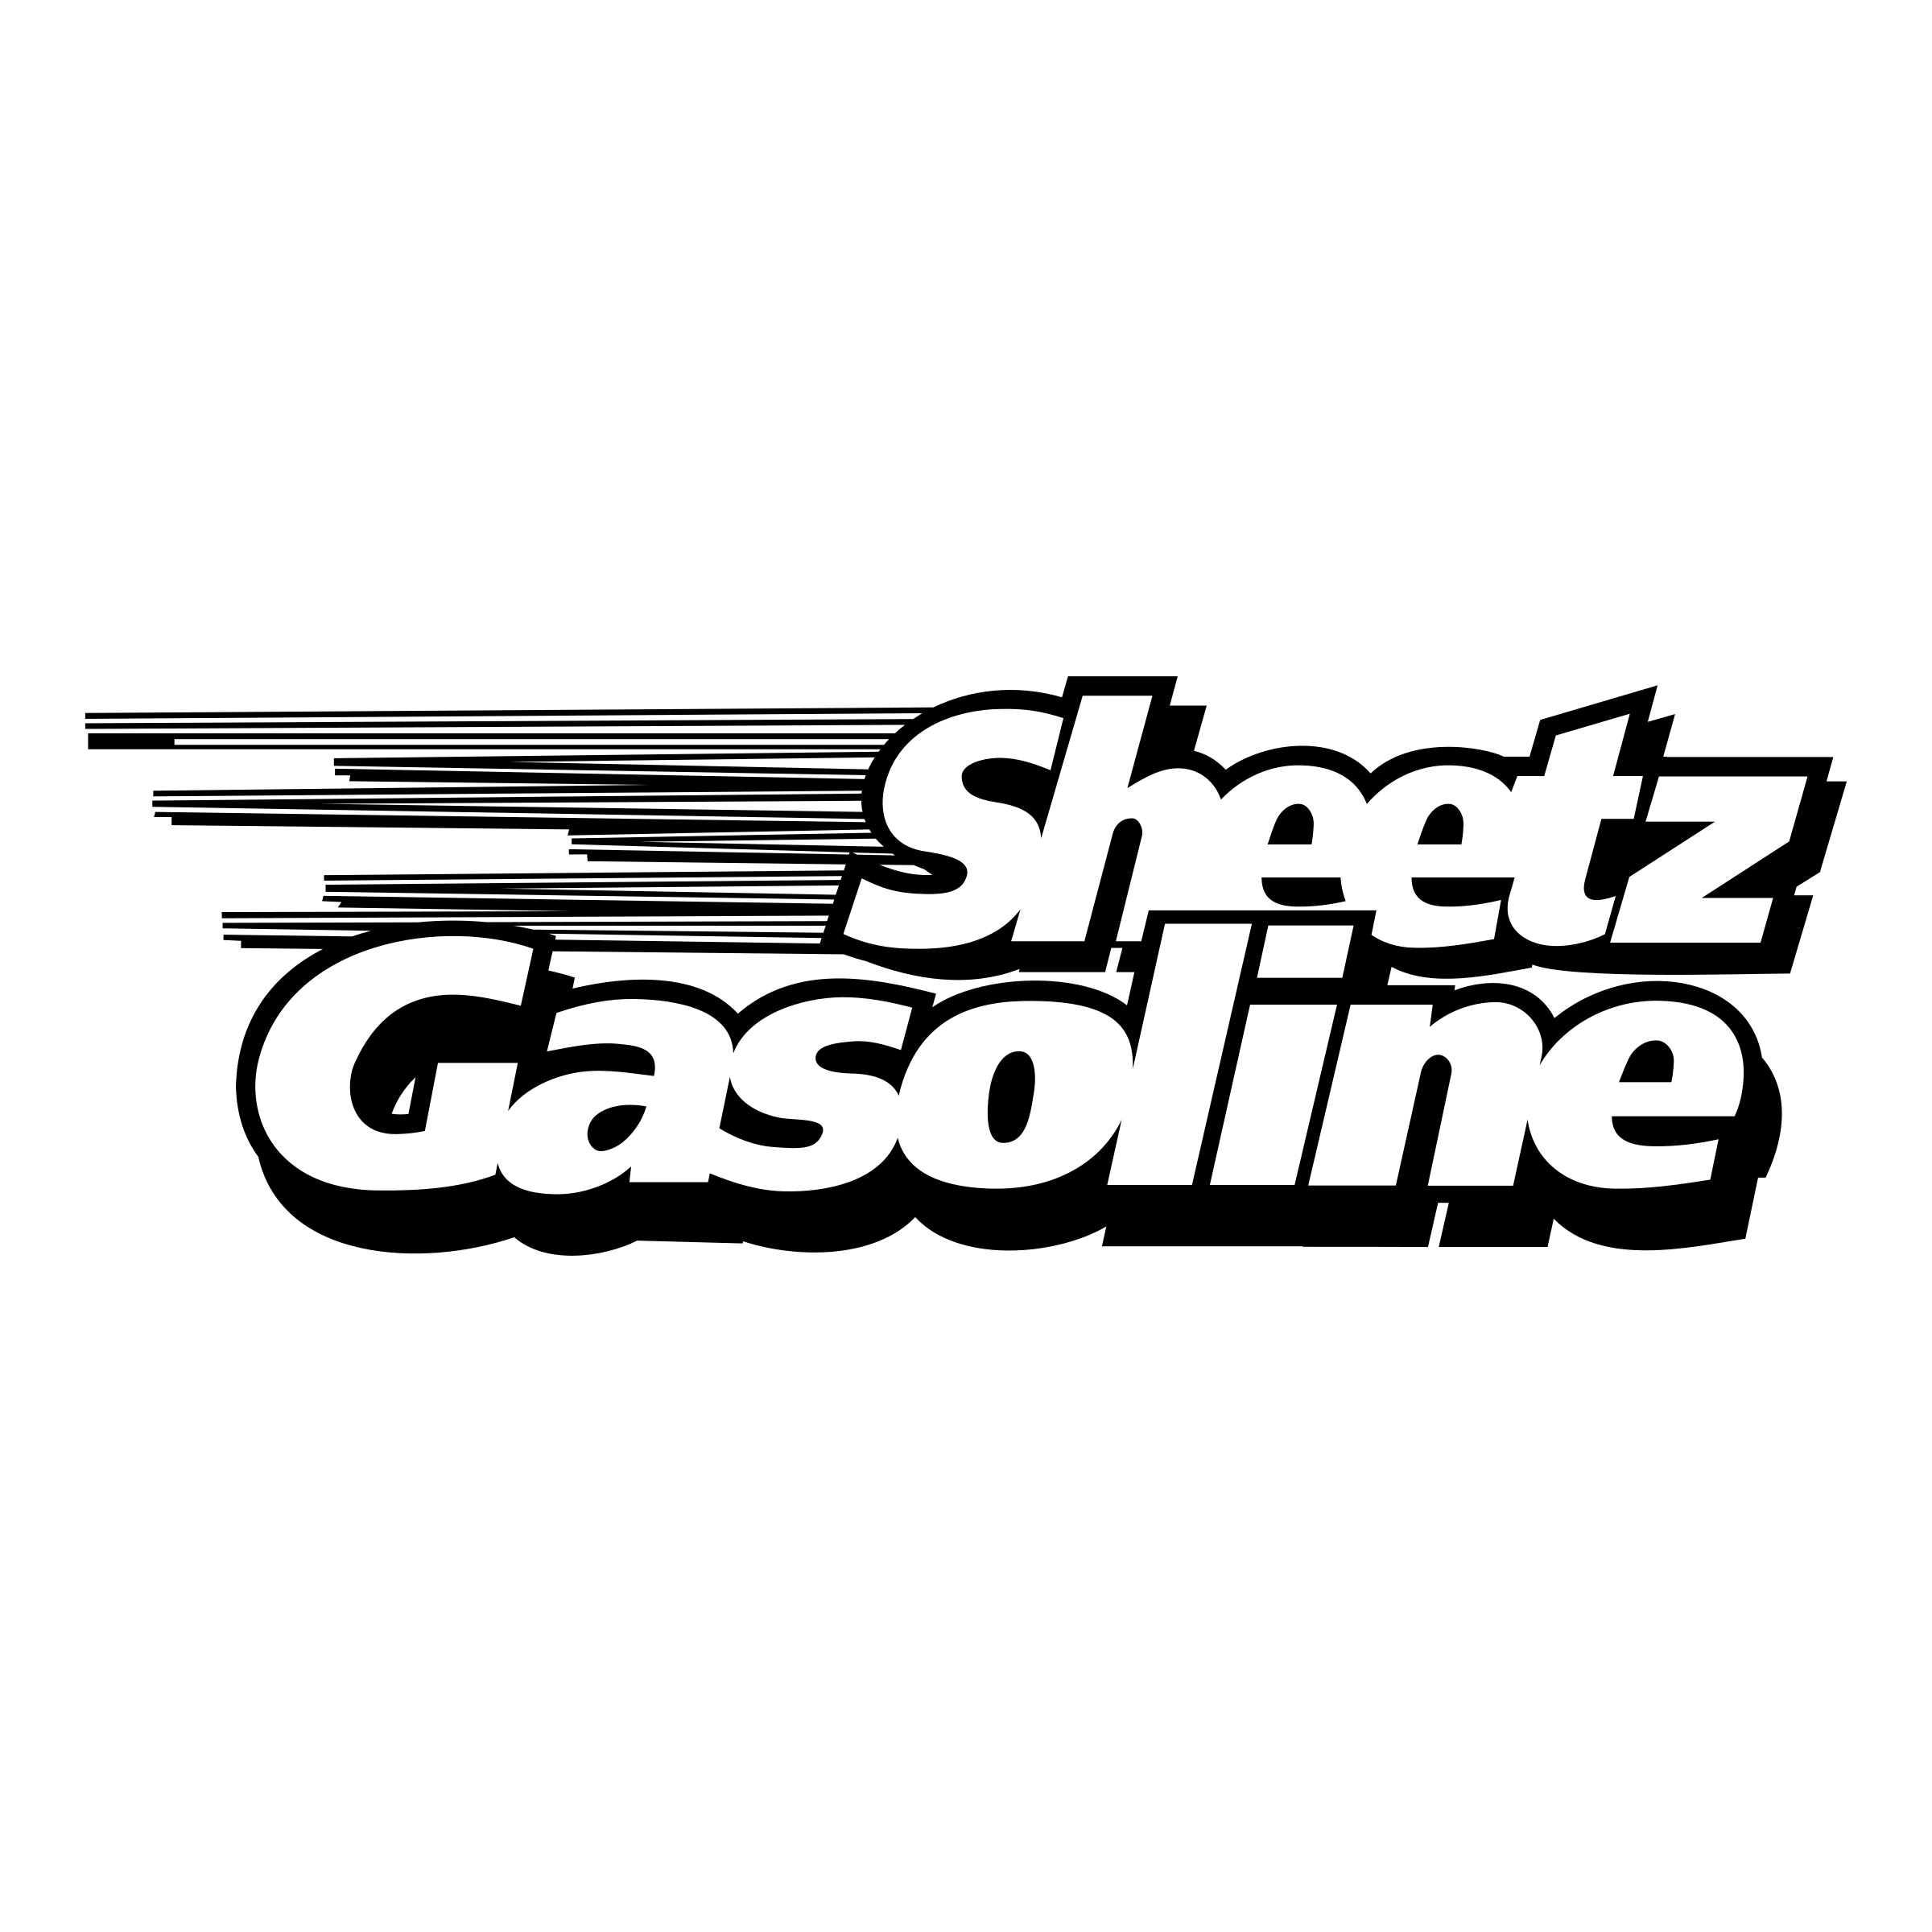 Sheetz Logo - Sheetz Gasoline Logo PNG Transparent & SVG Vector - Freebie Supply